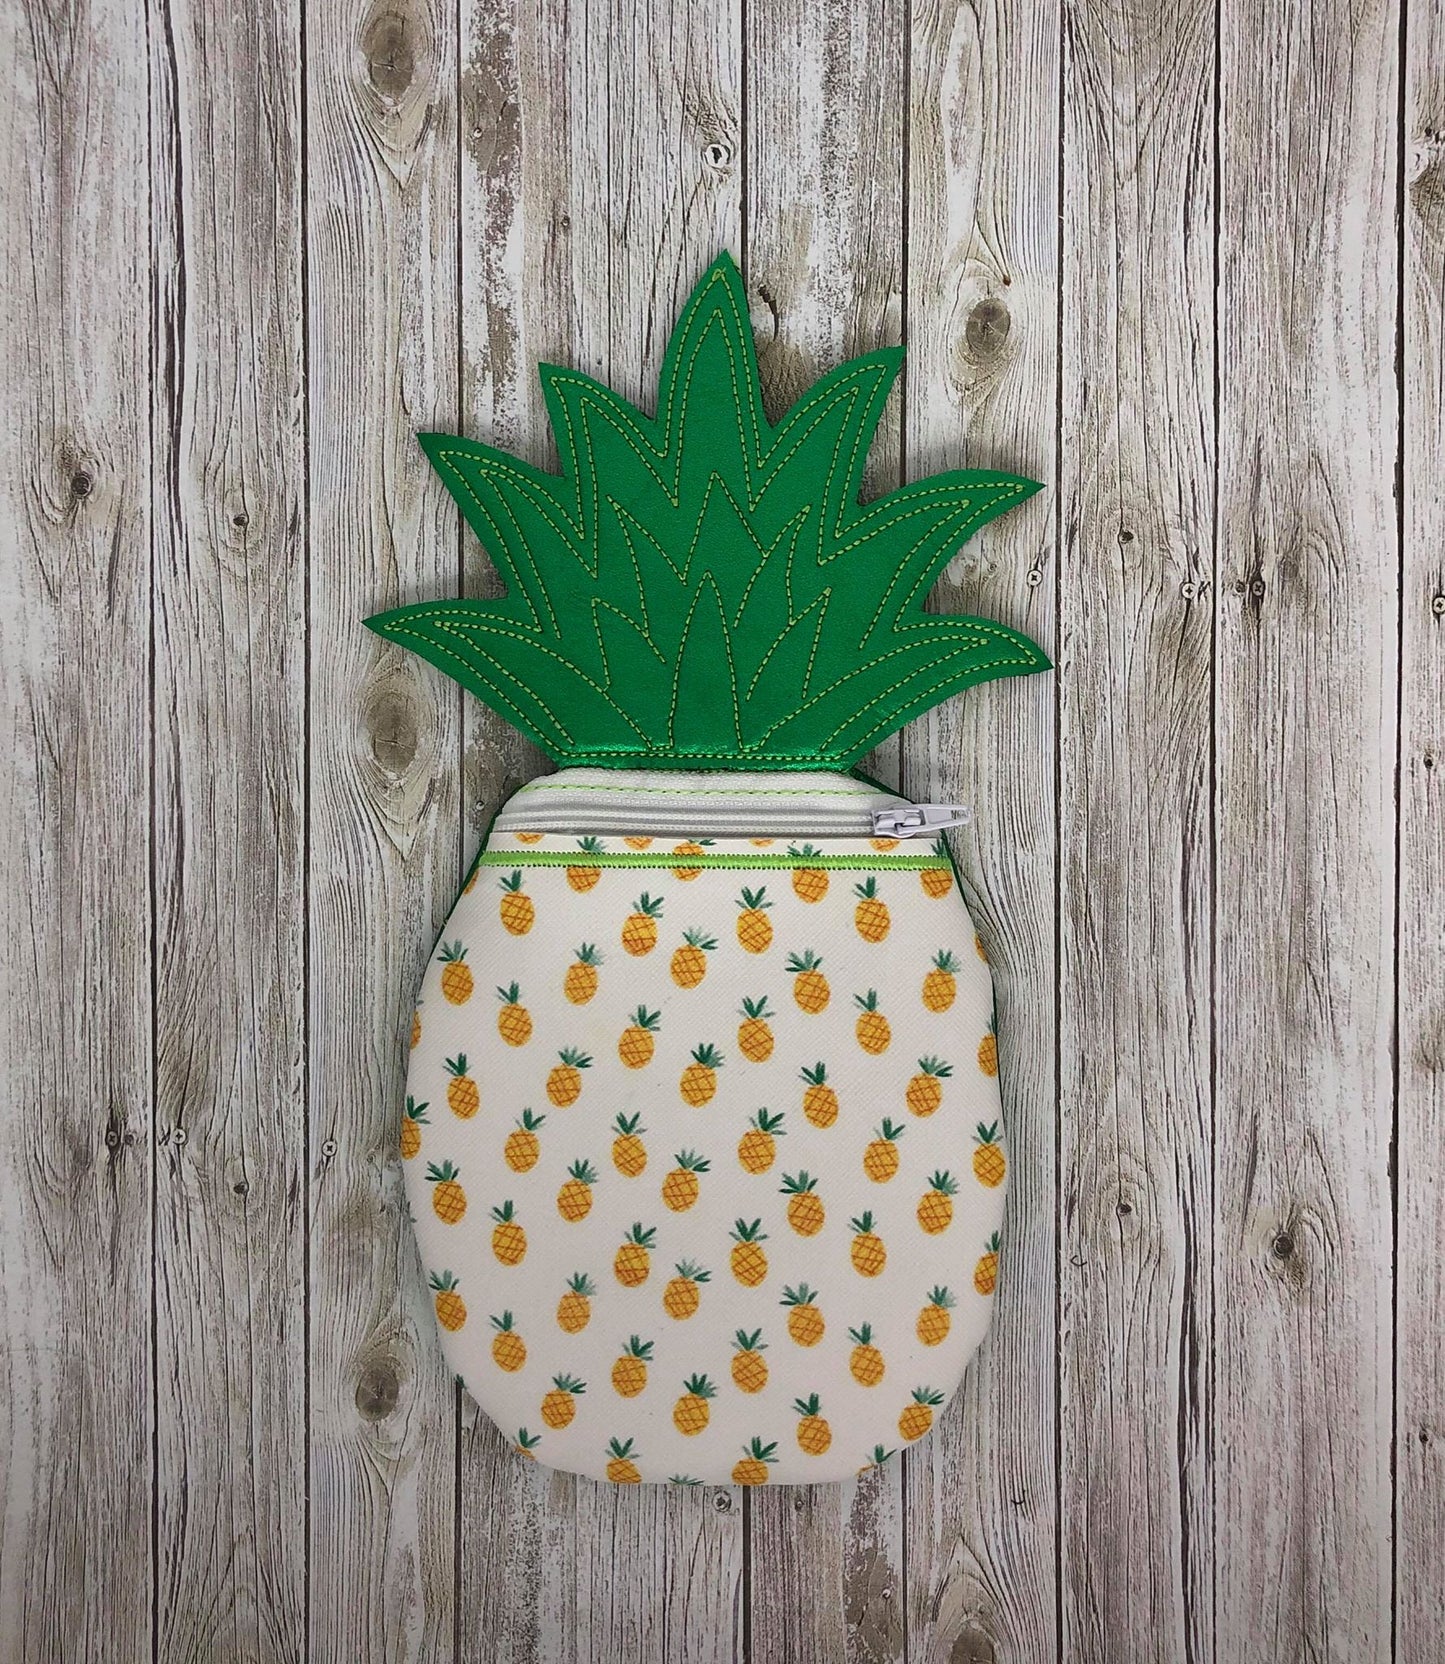 3D Pineapple Zipper Bag - 4 sizes - Digital Embroidery Design